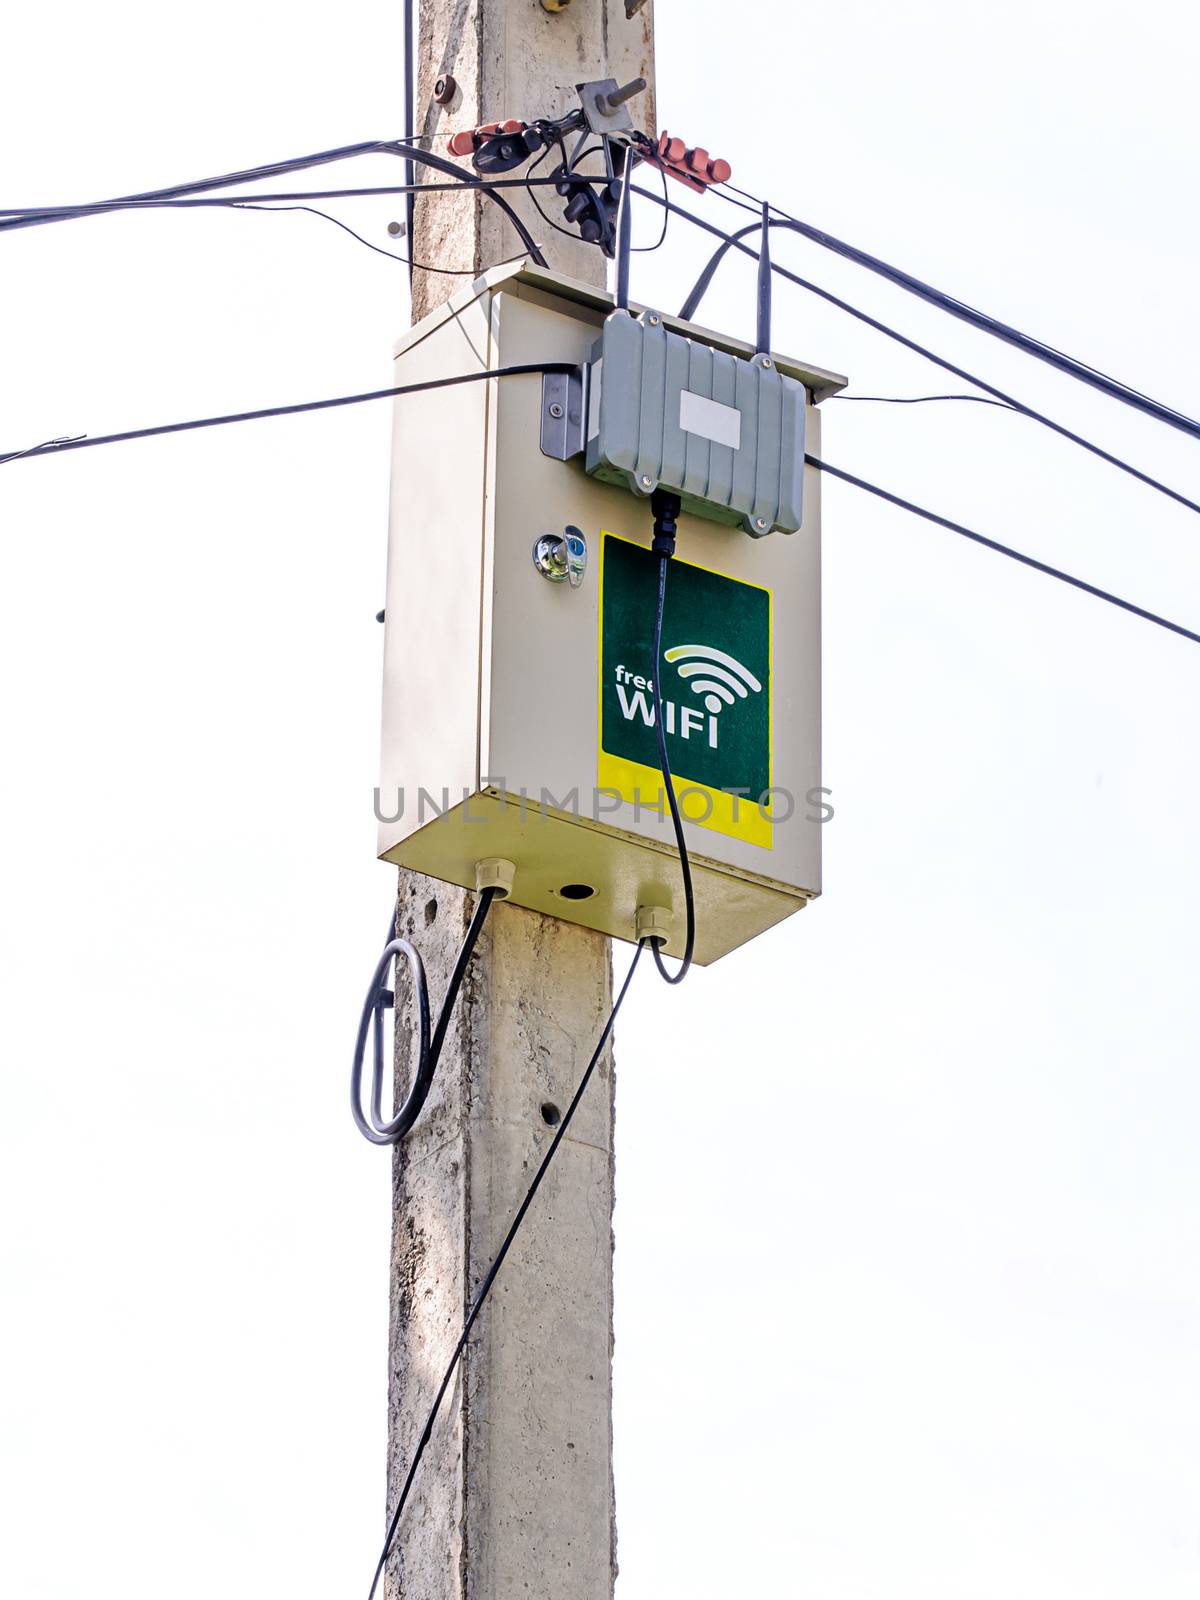 Wireless access point two antennas installation on pole